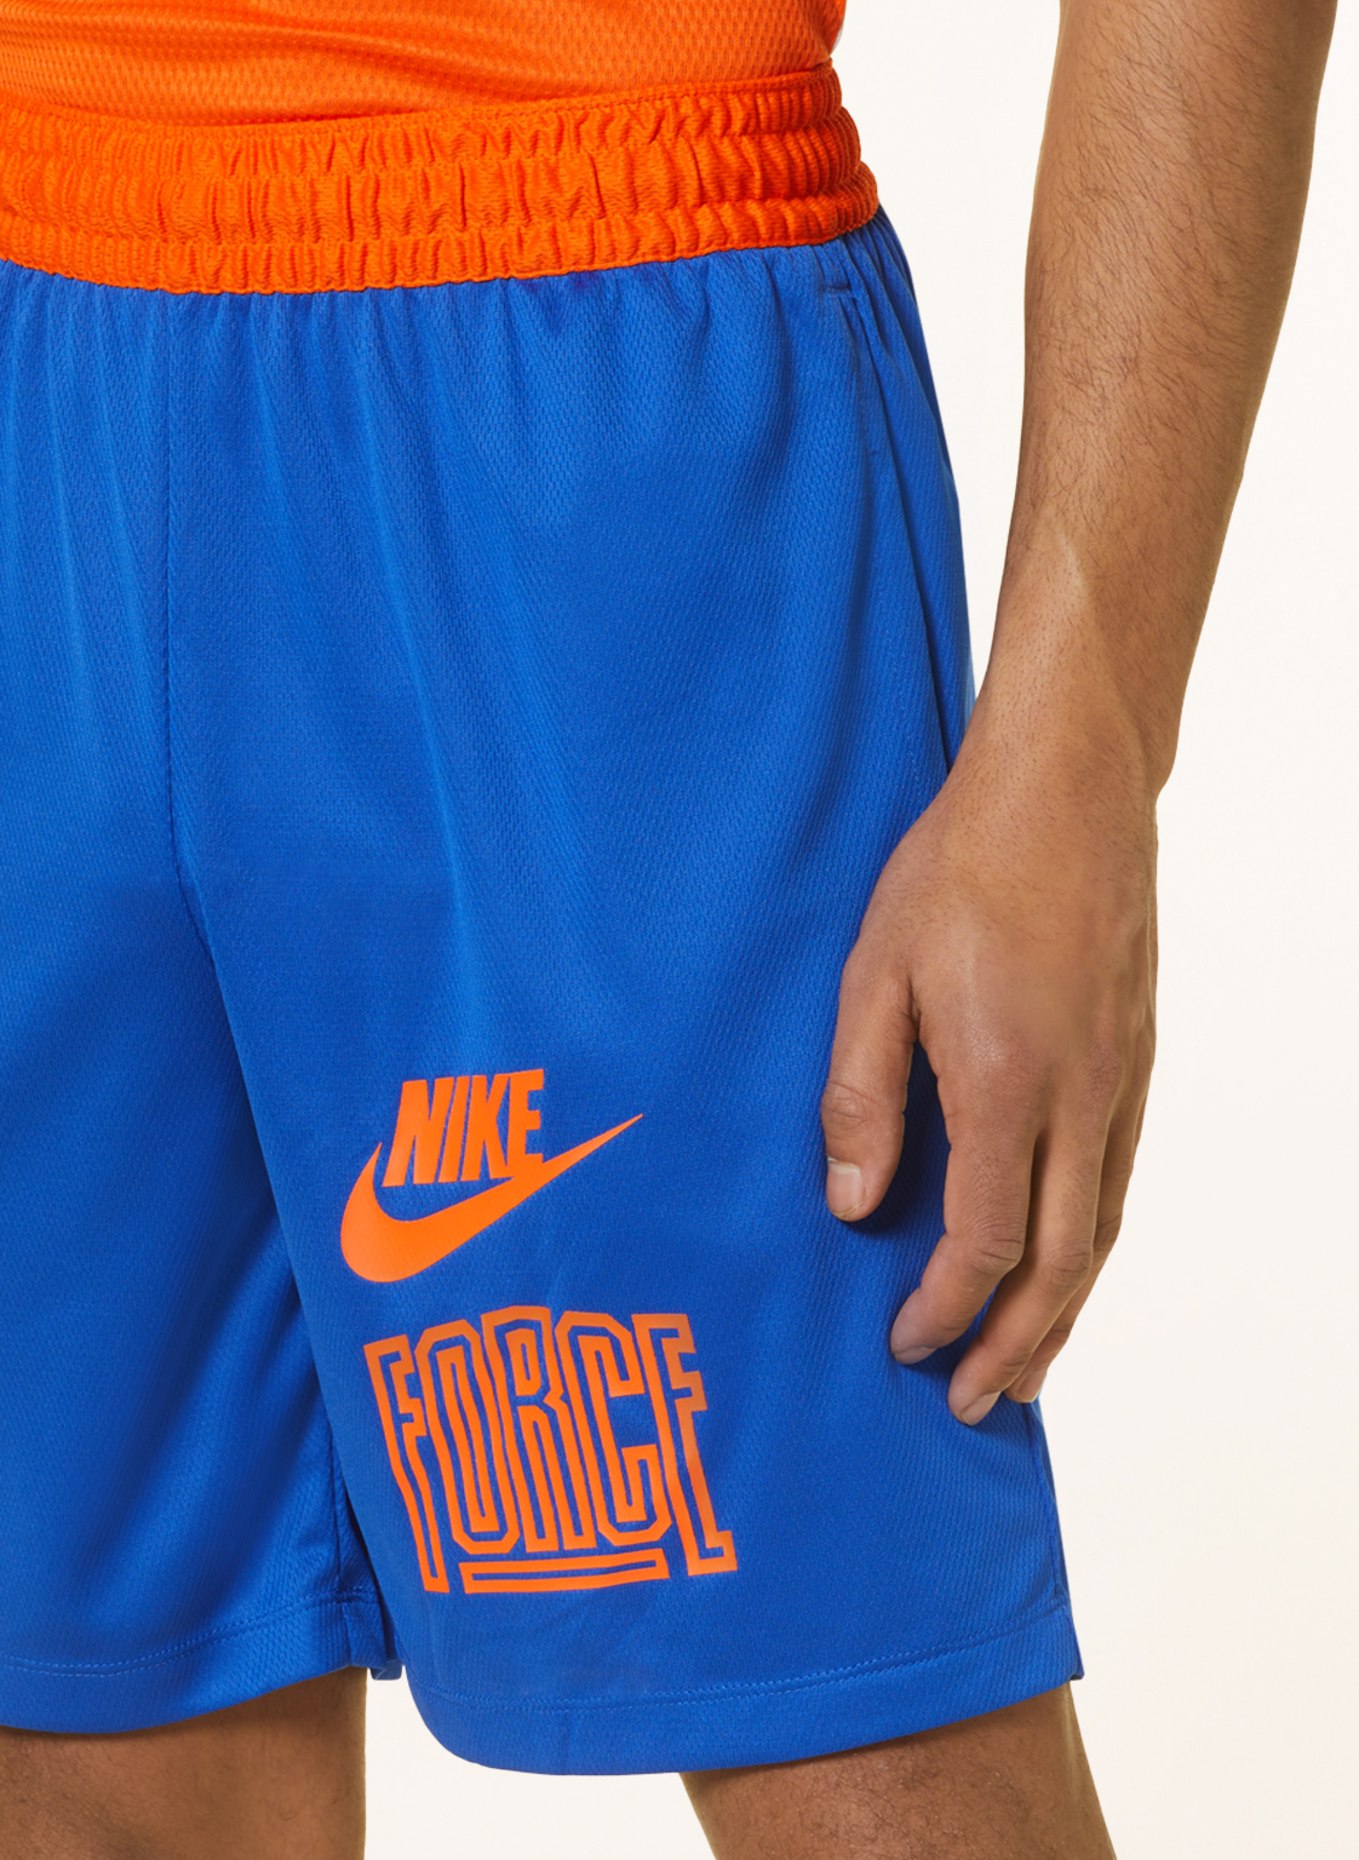 Nike Men's Shorts Size Large Orange Navy Blue L New York Knicks